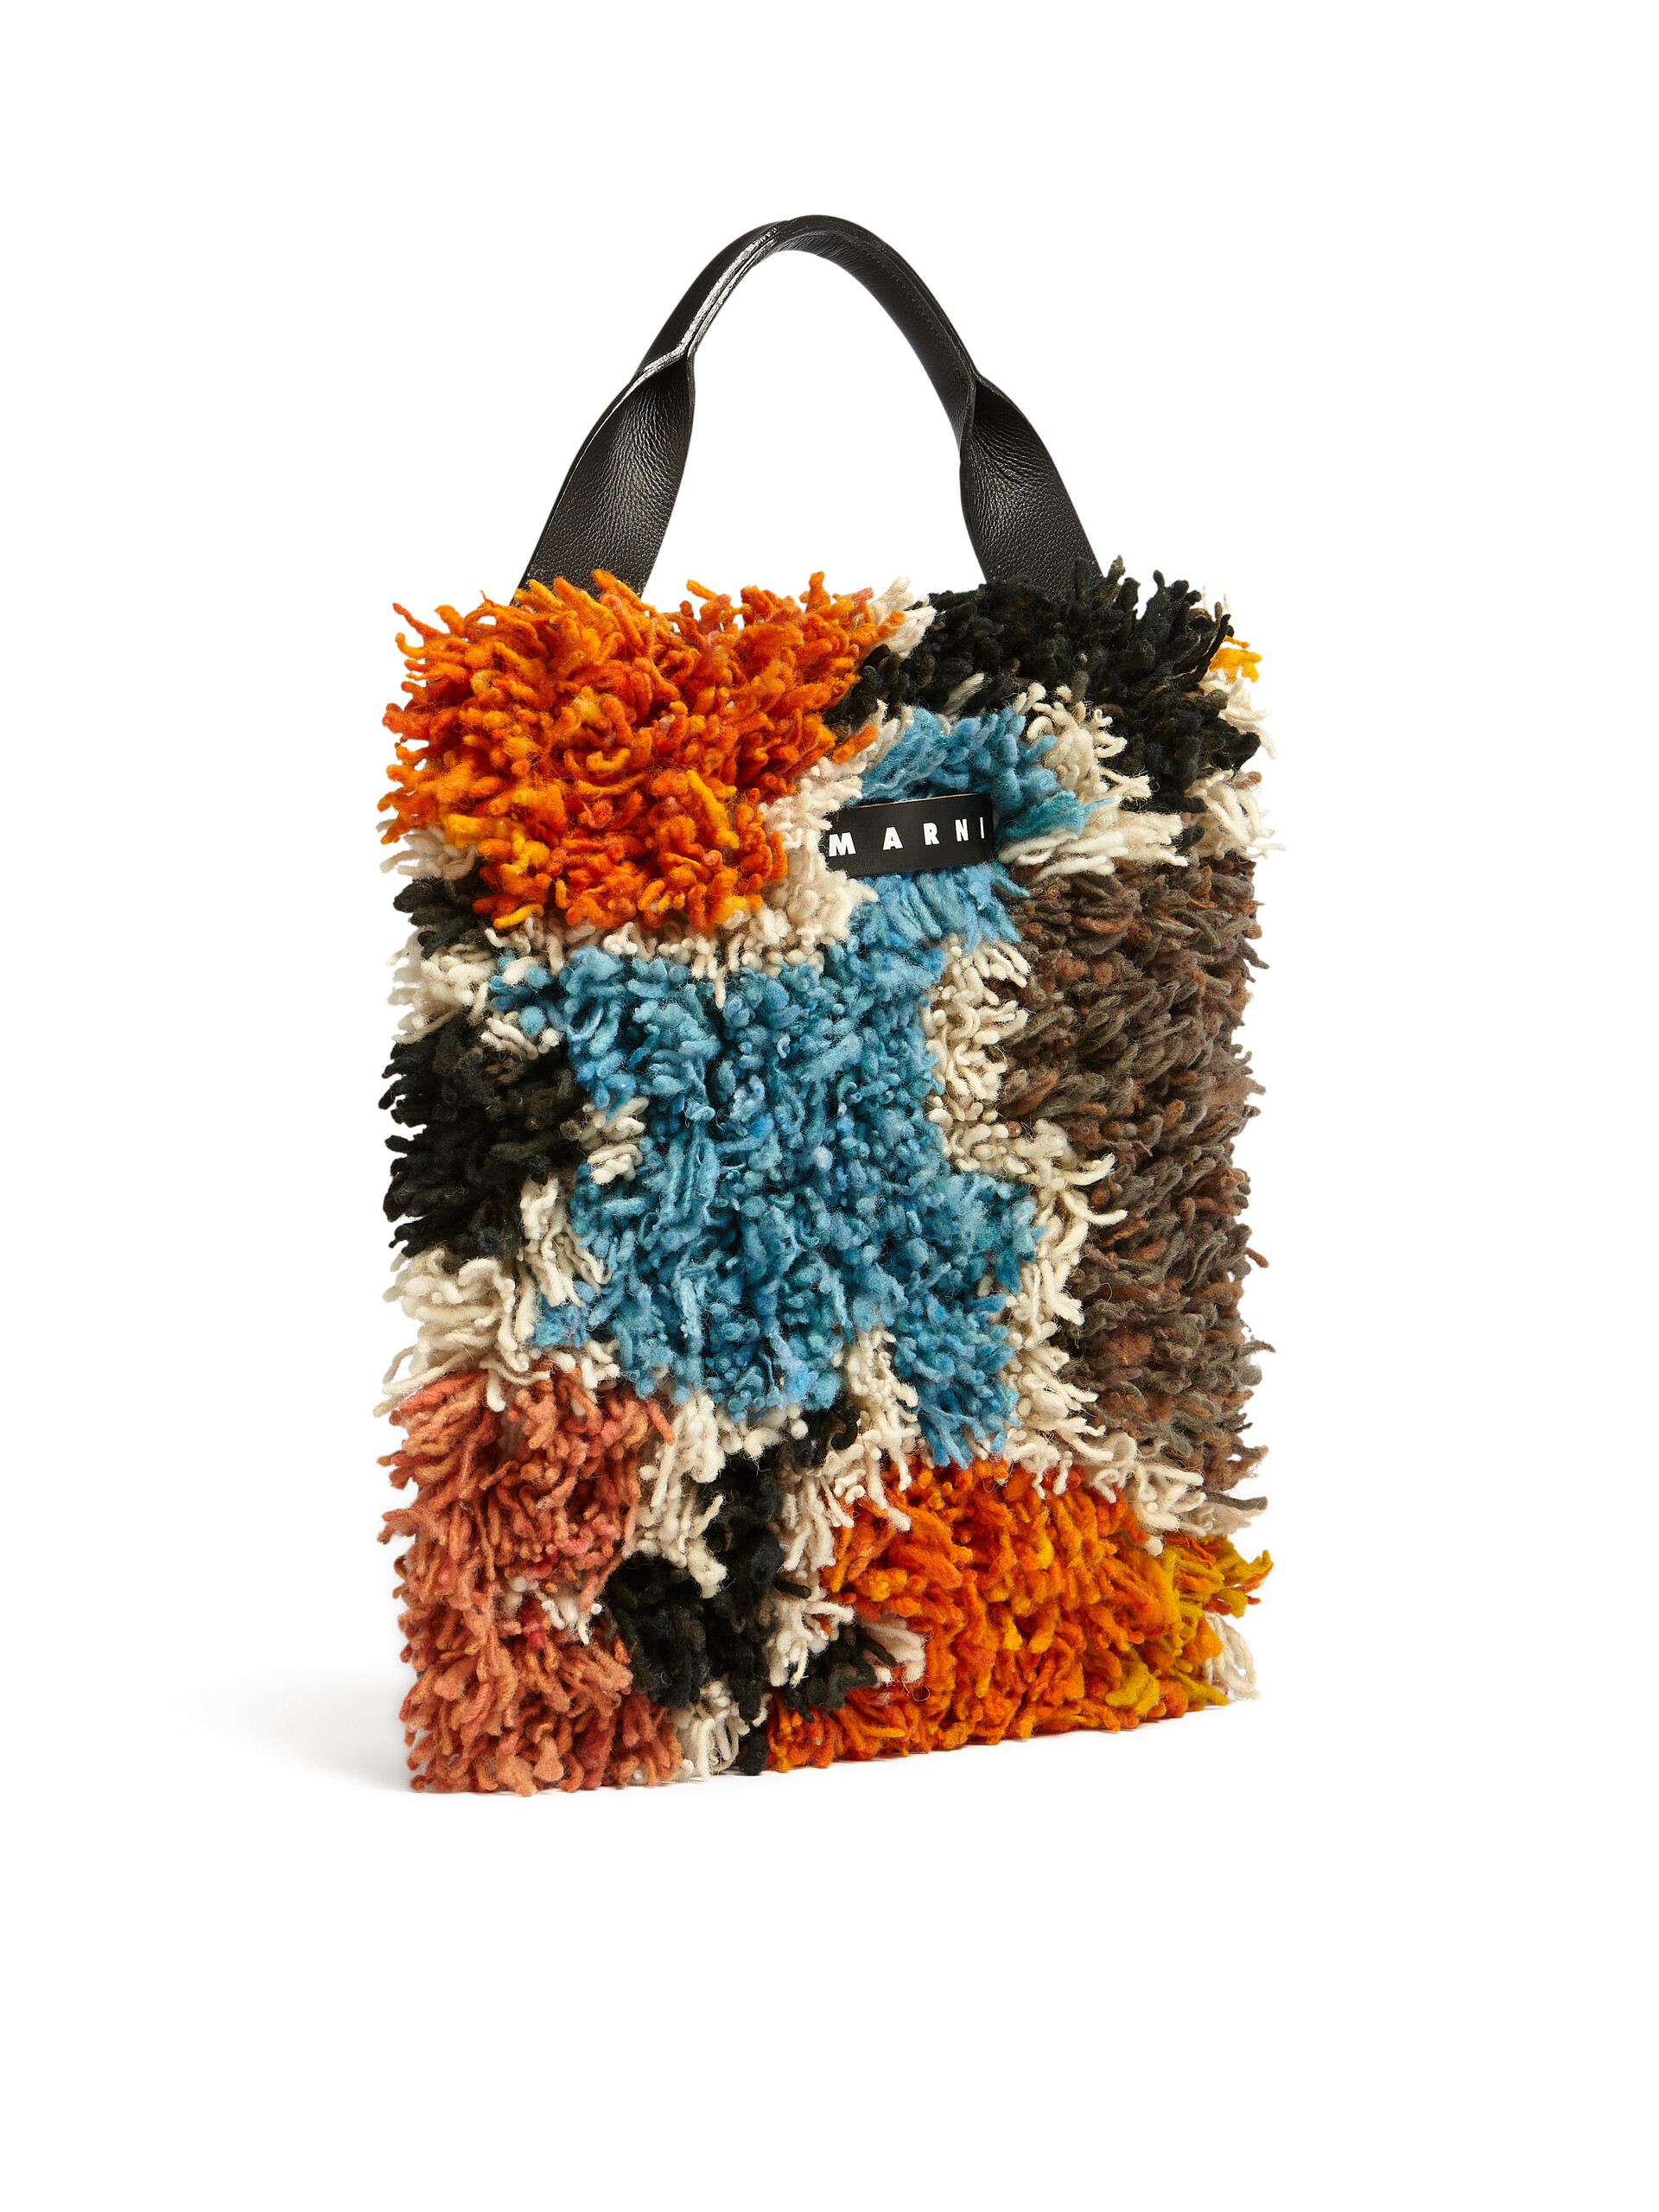 Borsa MARNI MARKET WOOL multicolore - Shopping Bags - Image 2